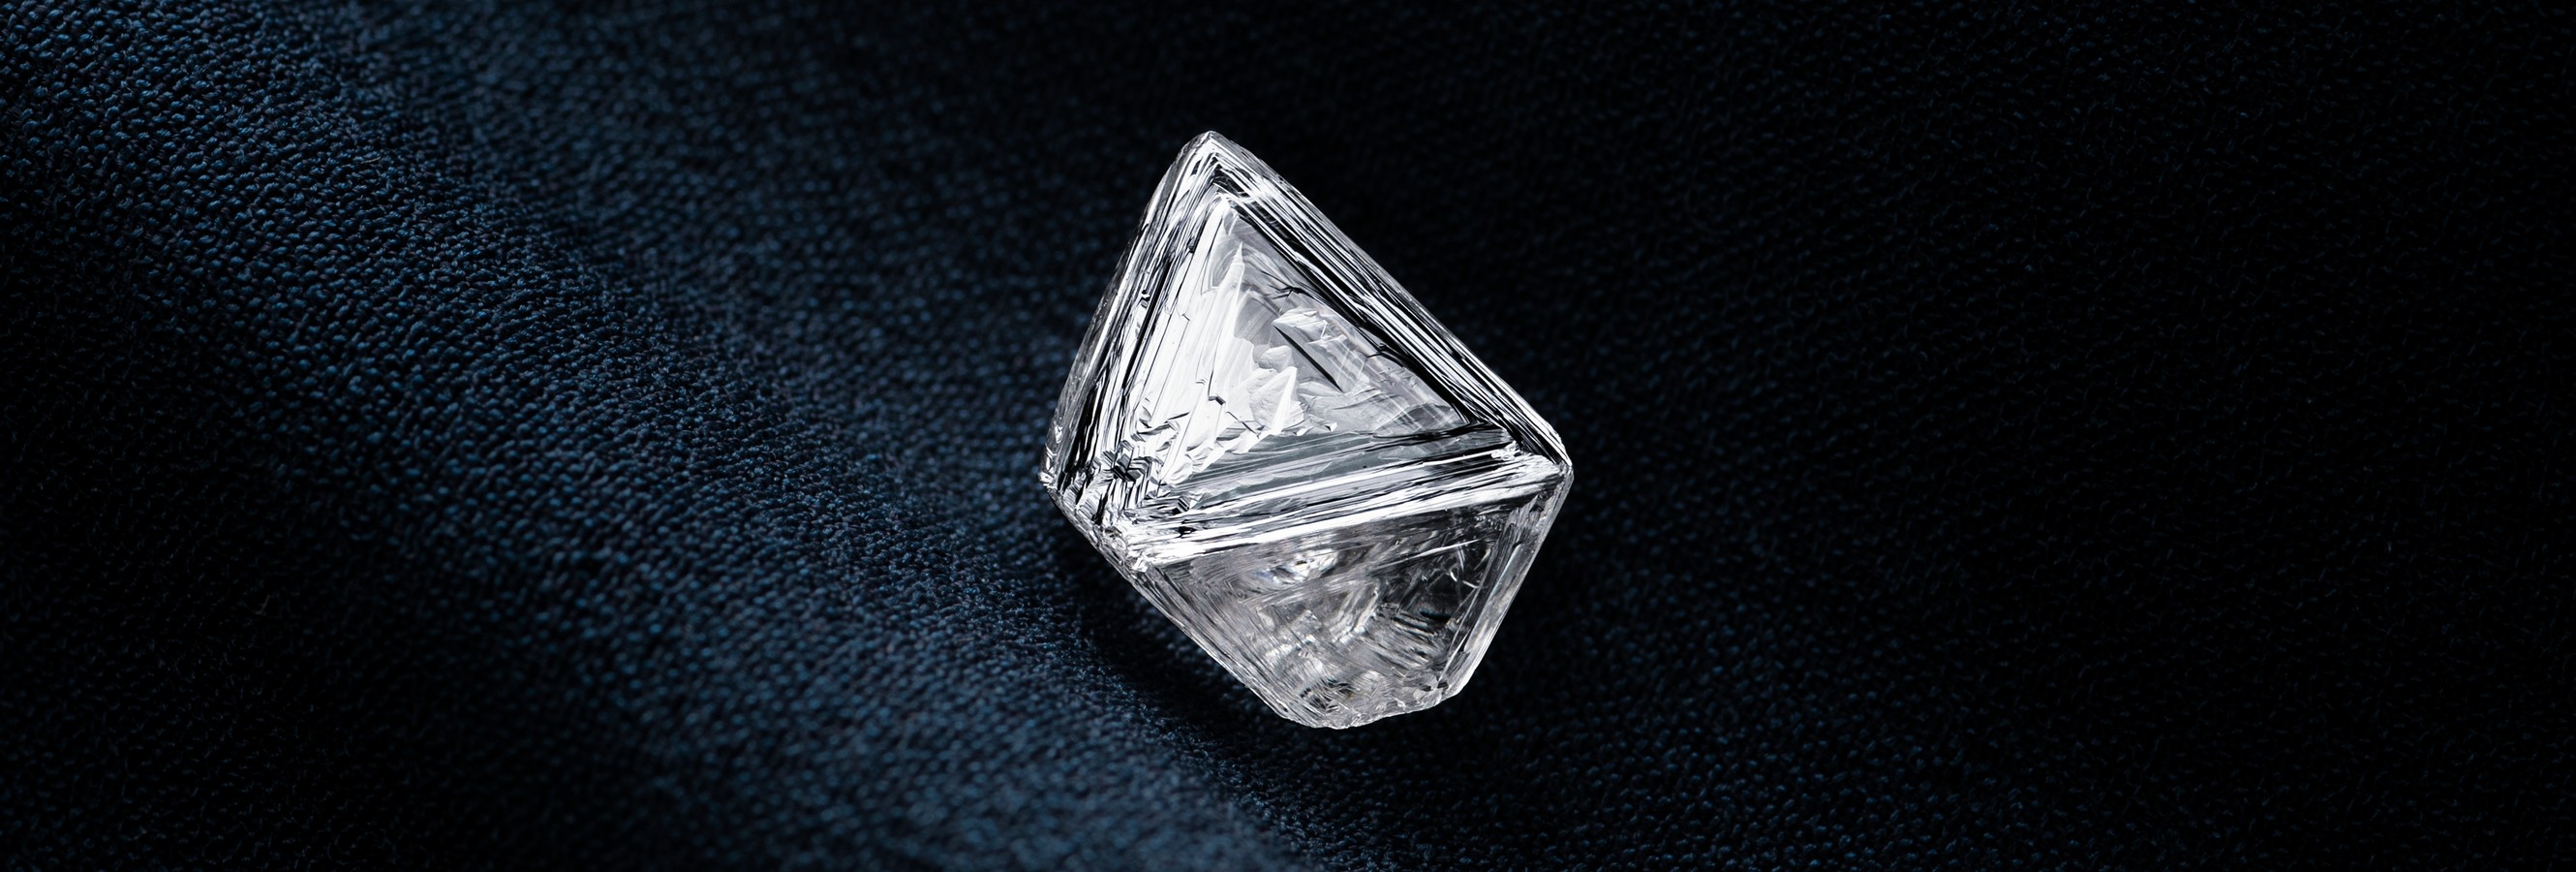  Diamond industry